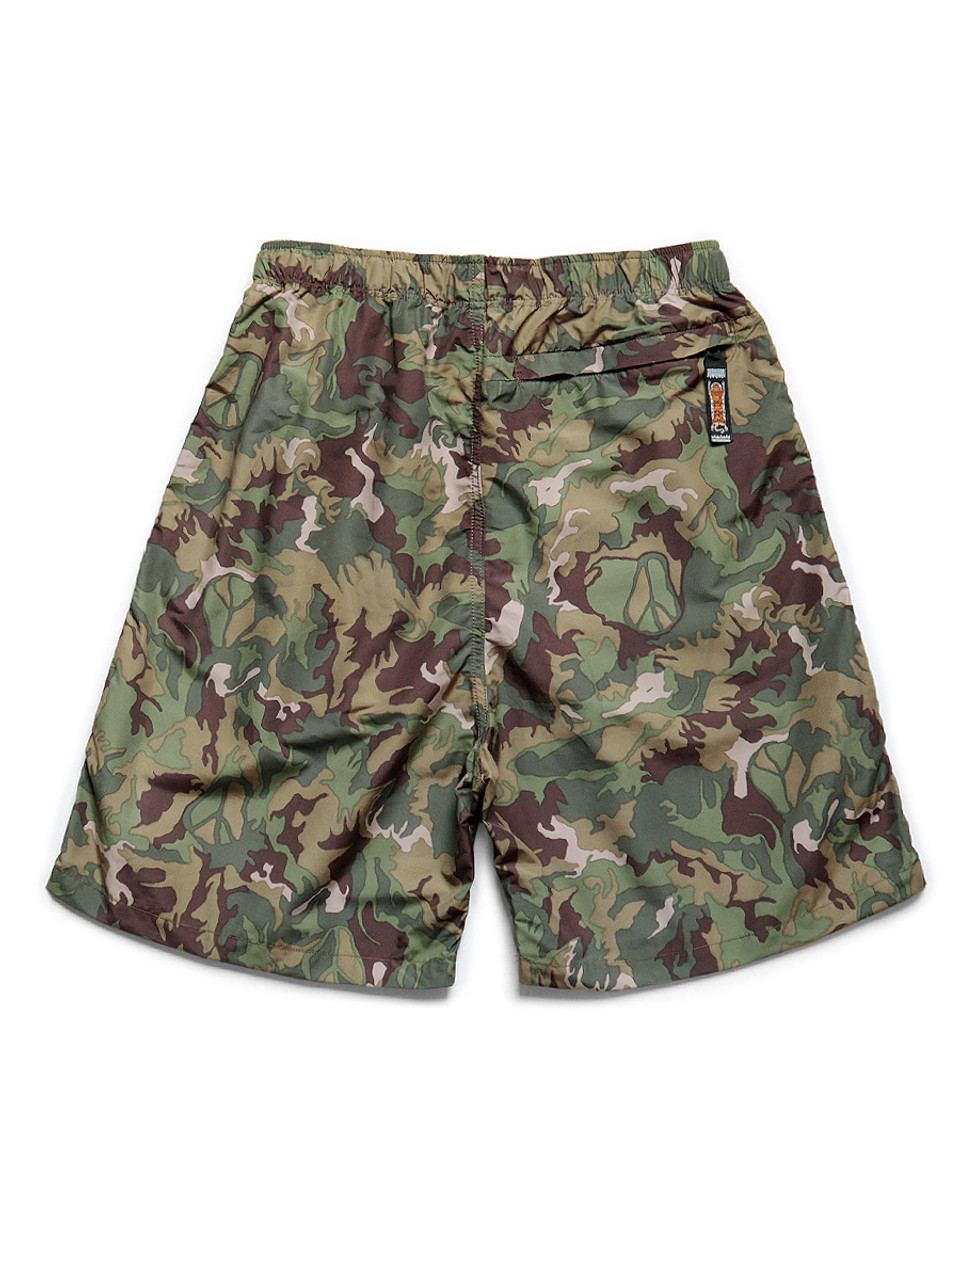 KAPITAL Short Pants FAST-DRY Taffeta Piece Camouflage Easy Shorts